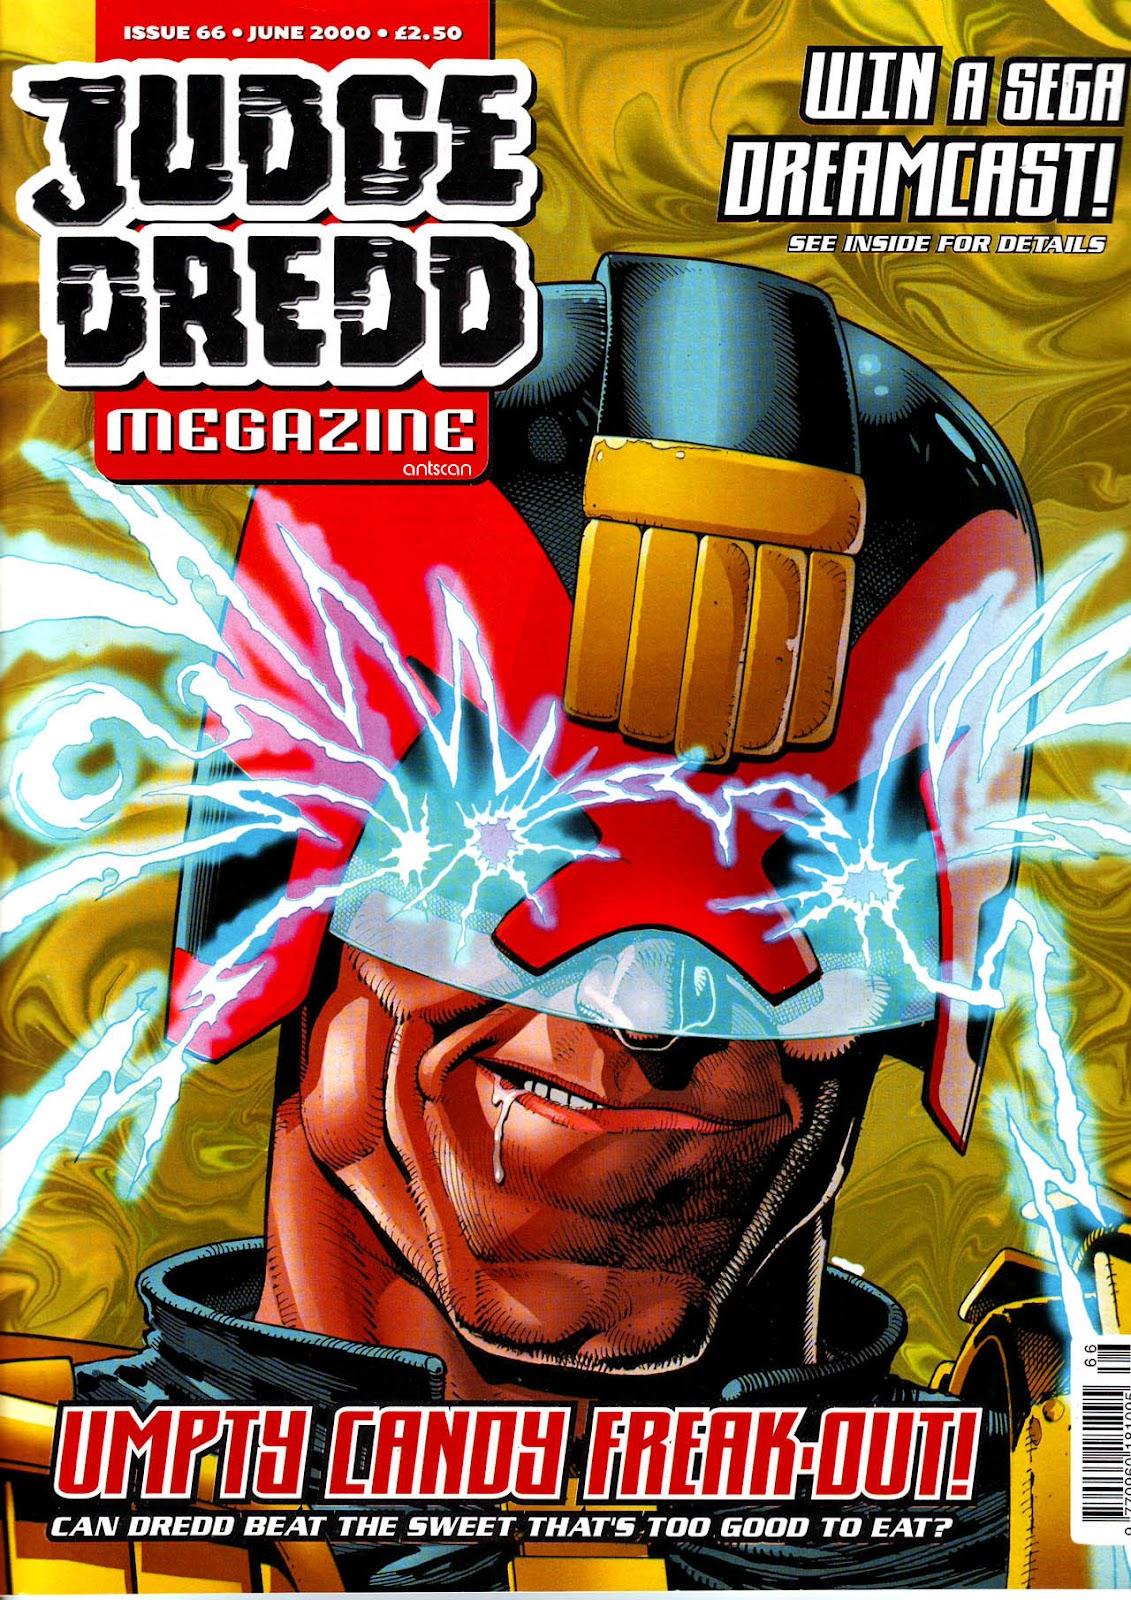 Judge Dredd Megazine (vol. 3) issue 66 - Page 1